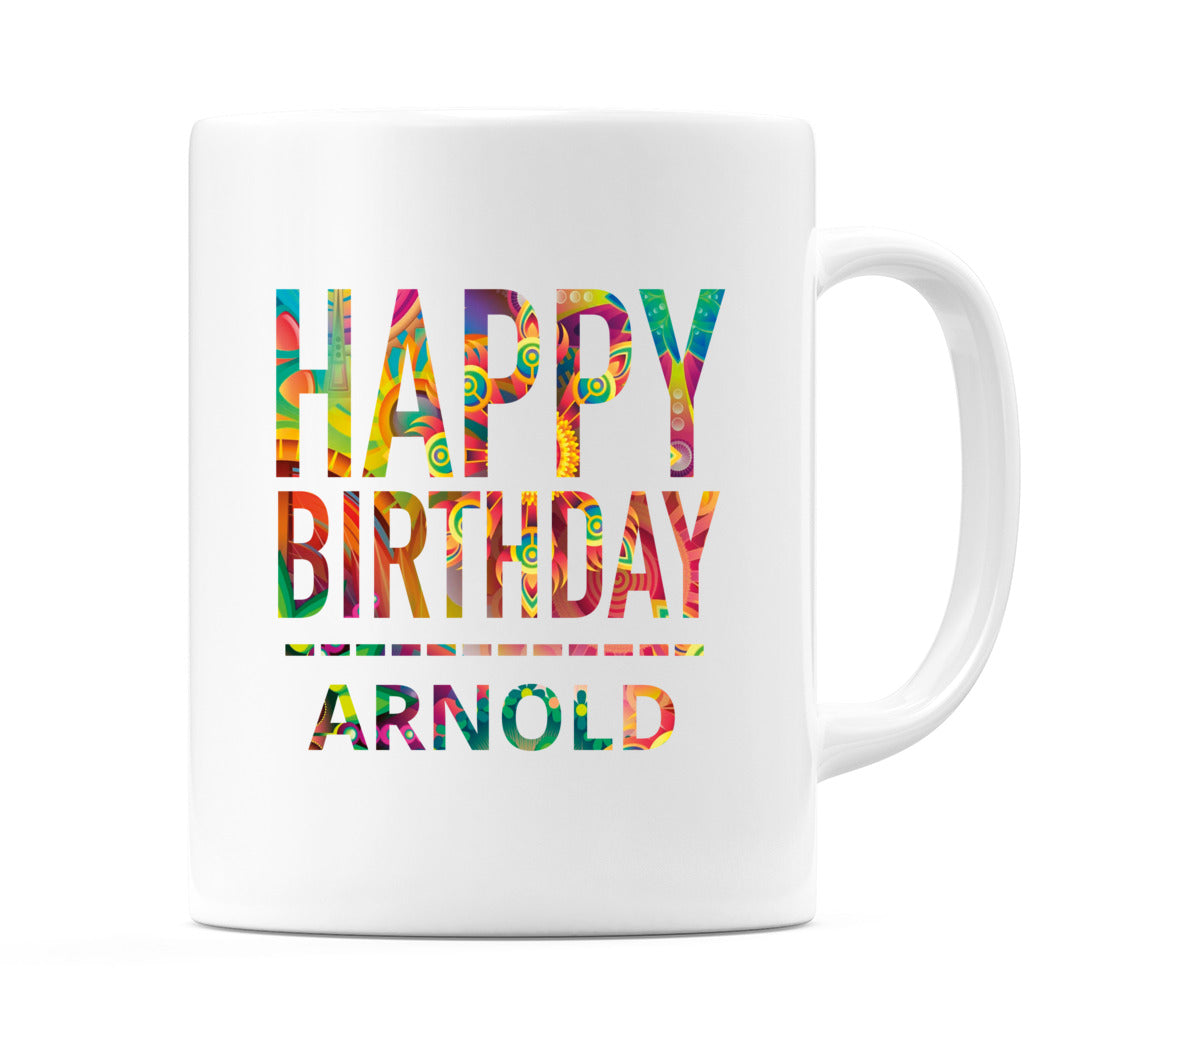 Happy Birthday Arnold (Tie Dye Effect) Mug Cup by WeDoMugs